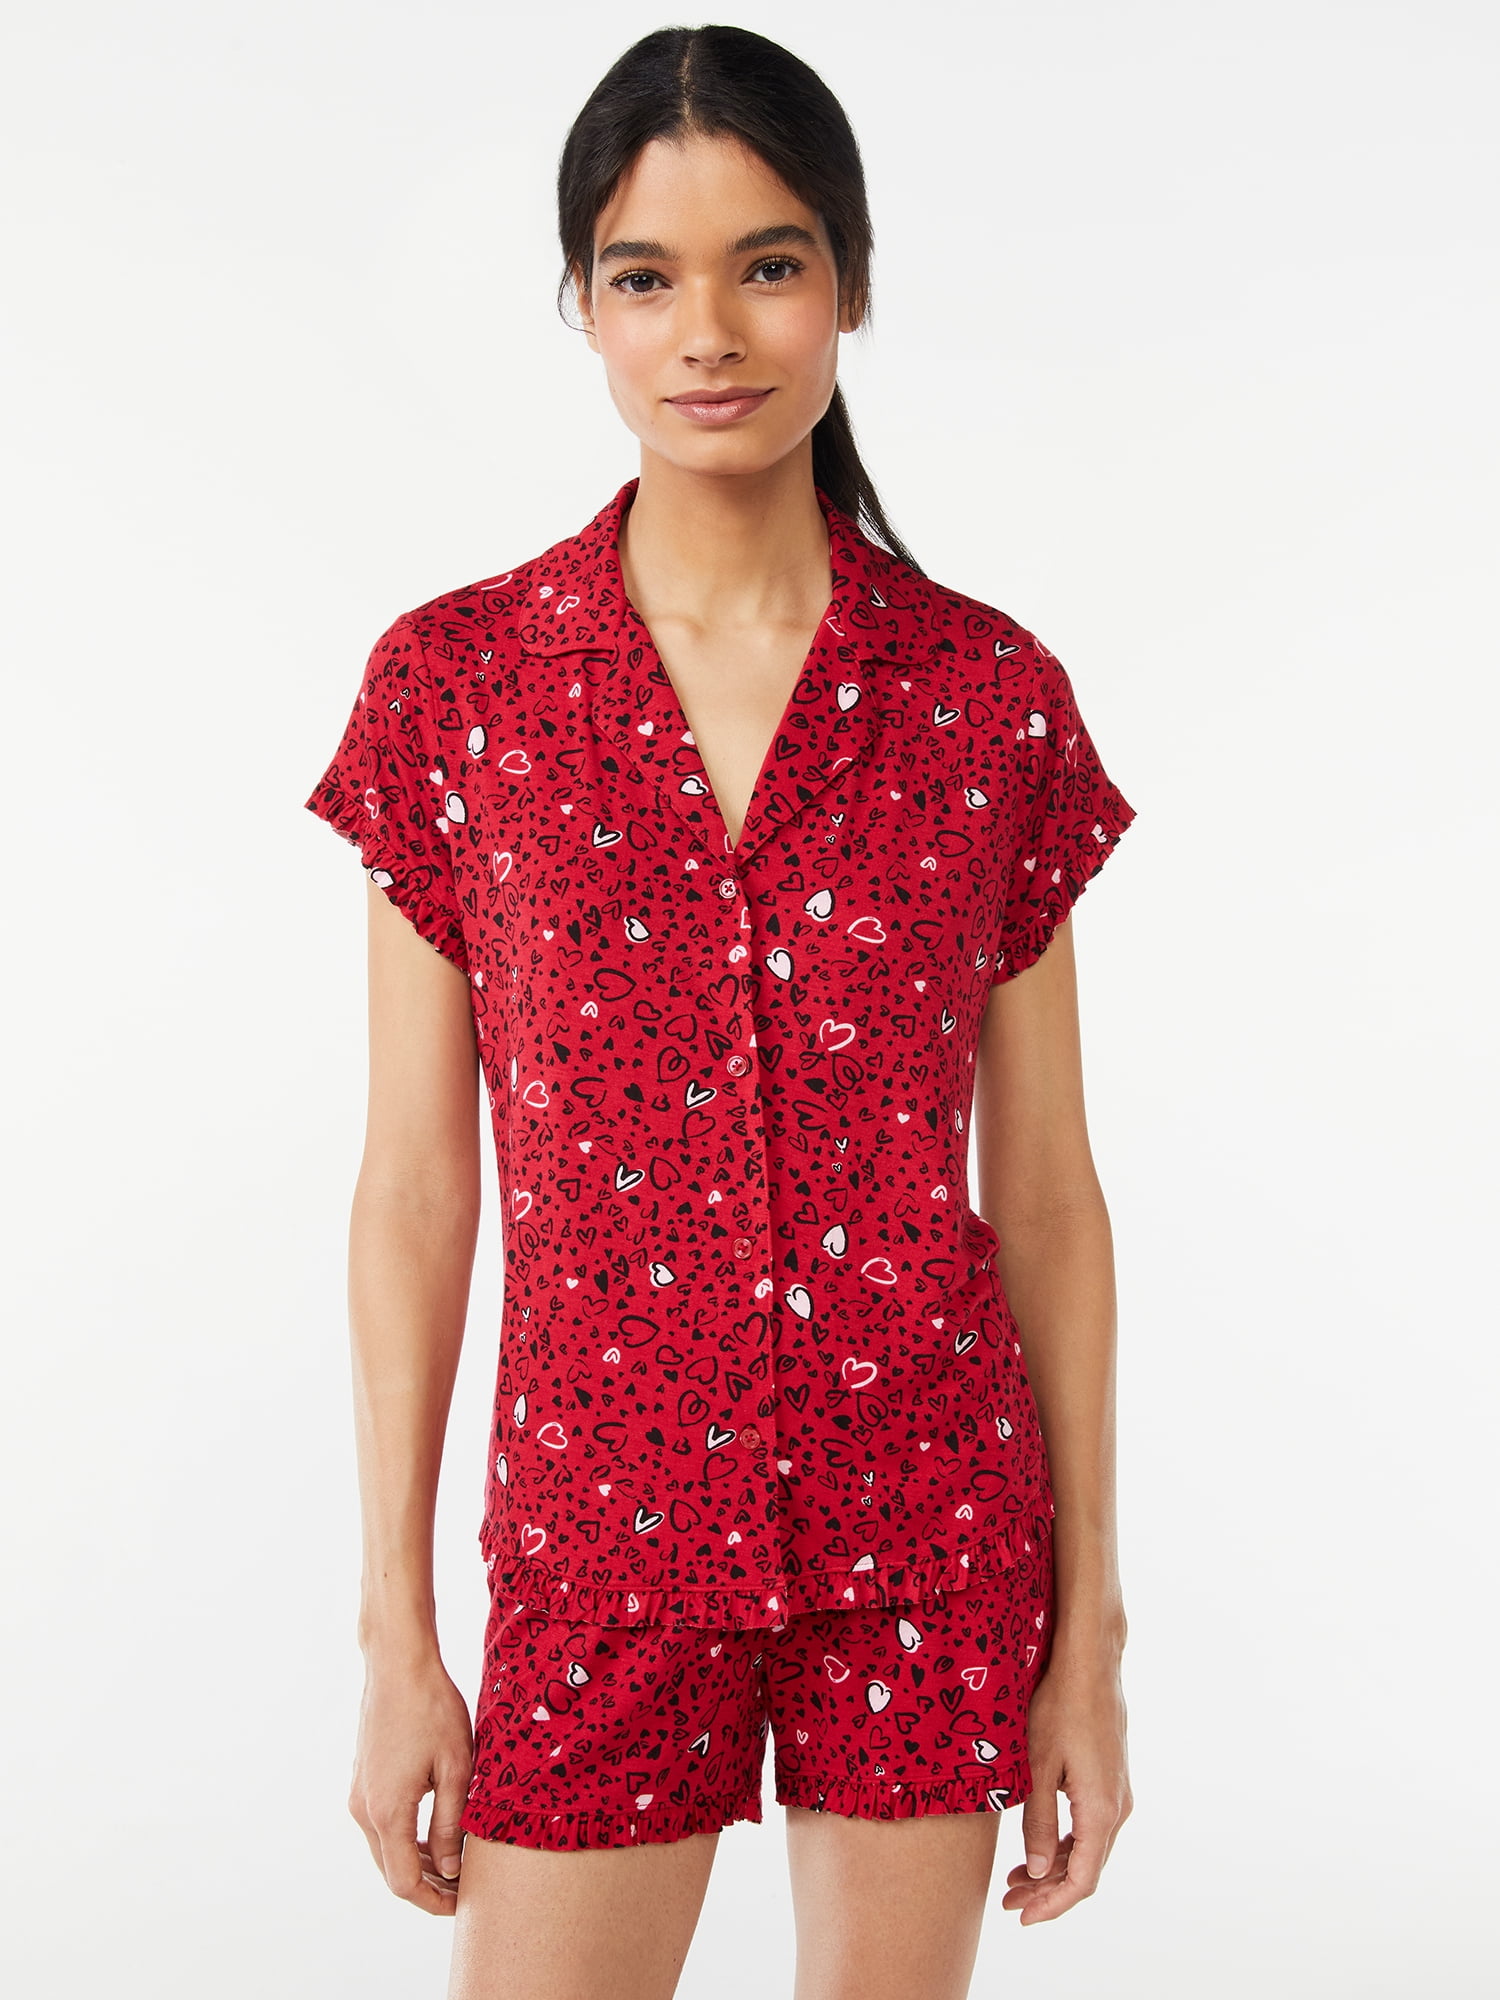 Joyspun Women's Ruffled Pajama Top and Shorts Set, 2-Piece, Sizes S to 3X